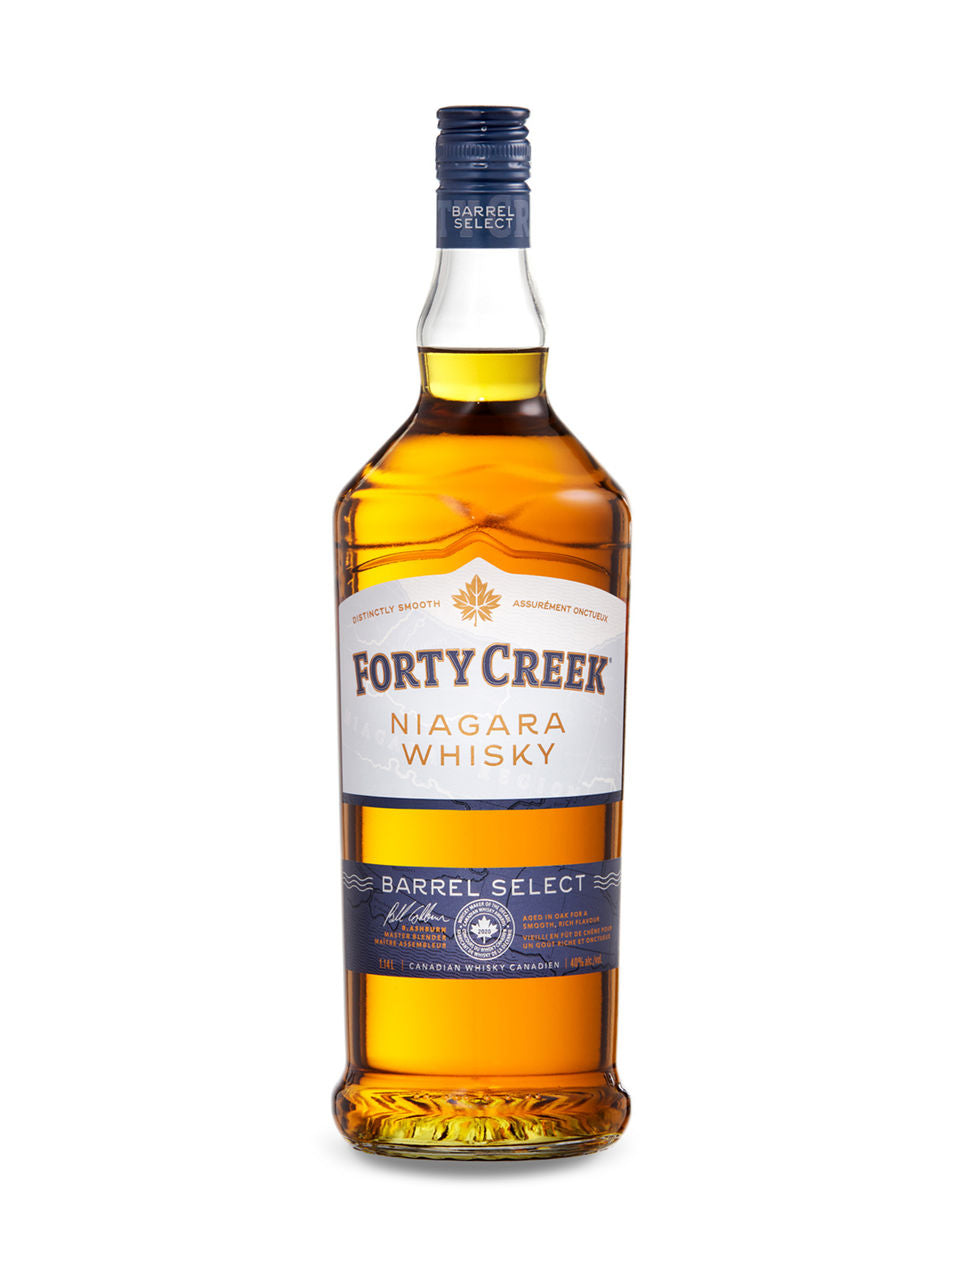 Forty Creek Barrel Select Whisky 1140 mL bottle